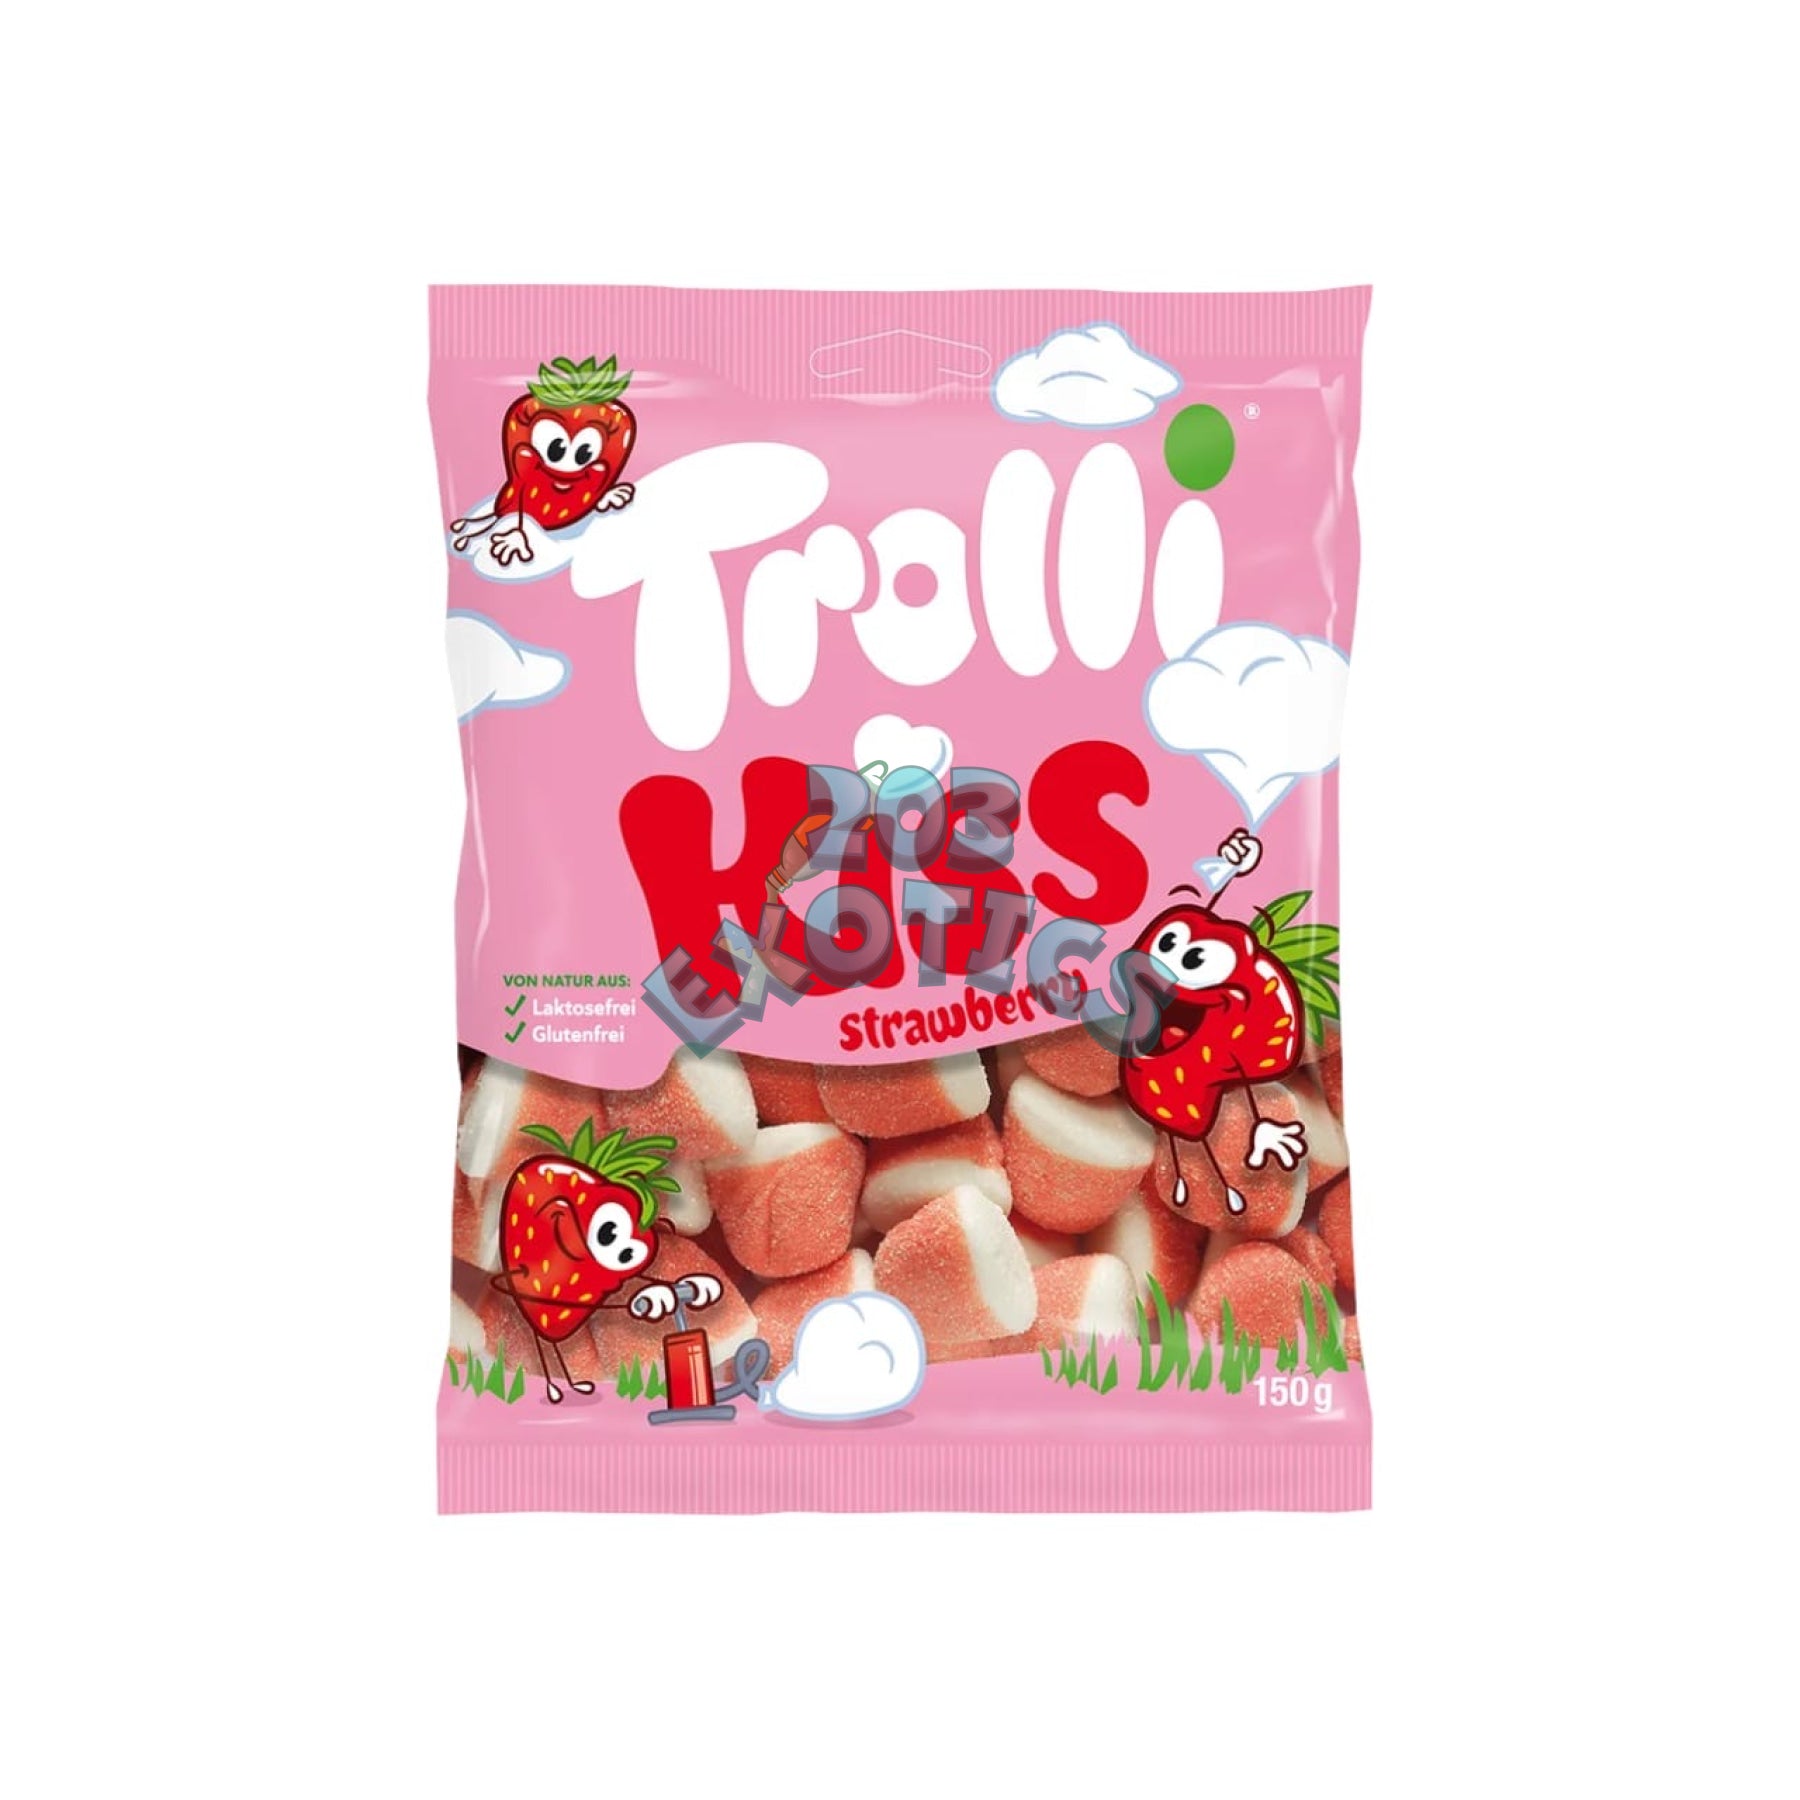 Trolli Strawberry Kiss (Coming Soon!!)